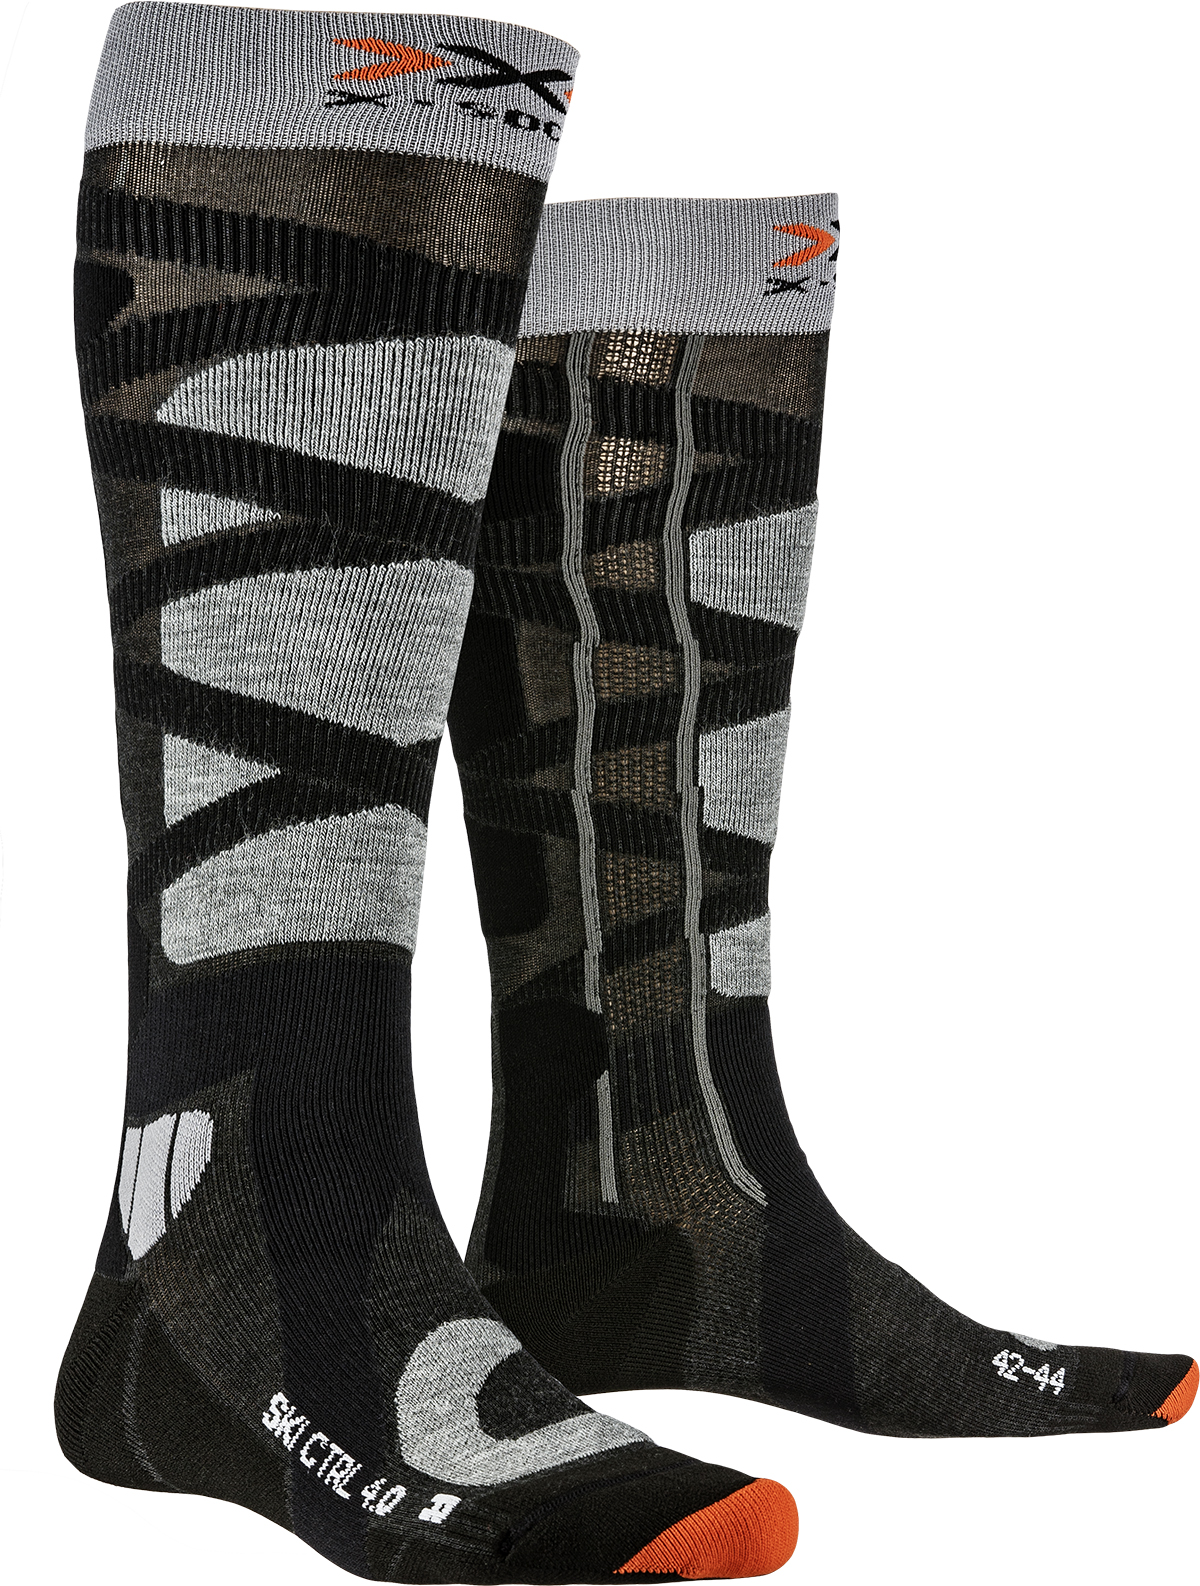 Полиэстеровые носки X-Socks Ski Control 4.0 Anthracite Melange/Stone Grey Melange (42-44)